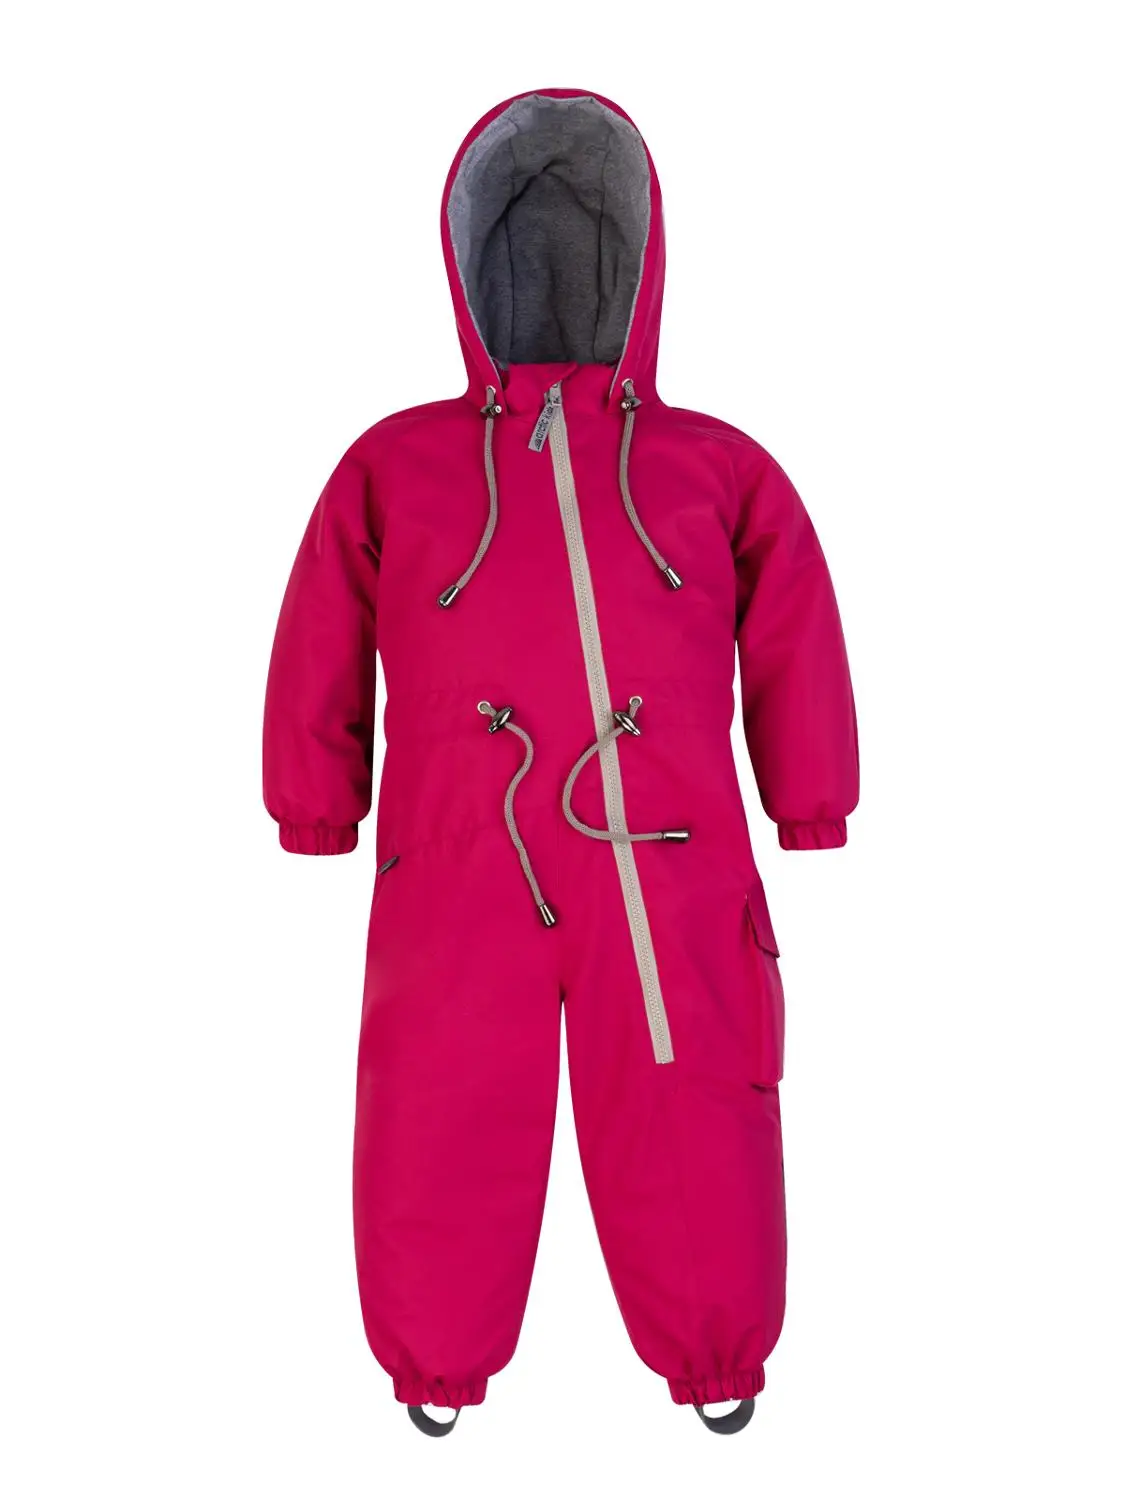 Arctic deti/nohavice (membrány/jar-jeseň), detské oblečenie, nohavice, detské vetrovky pre deti